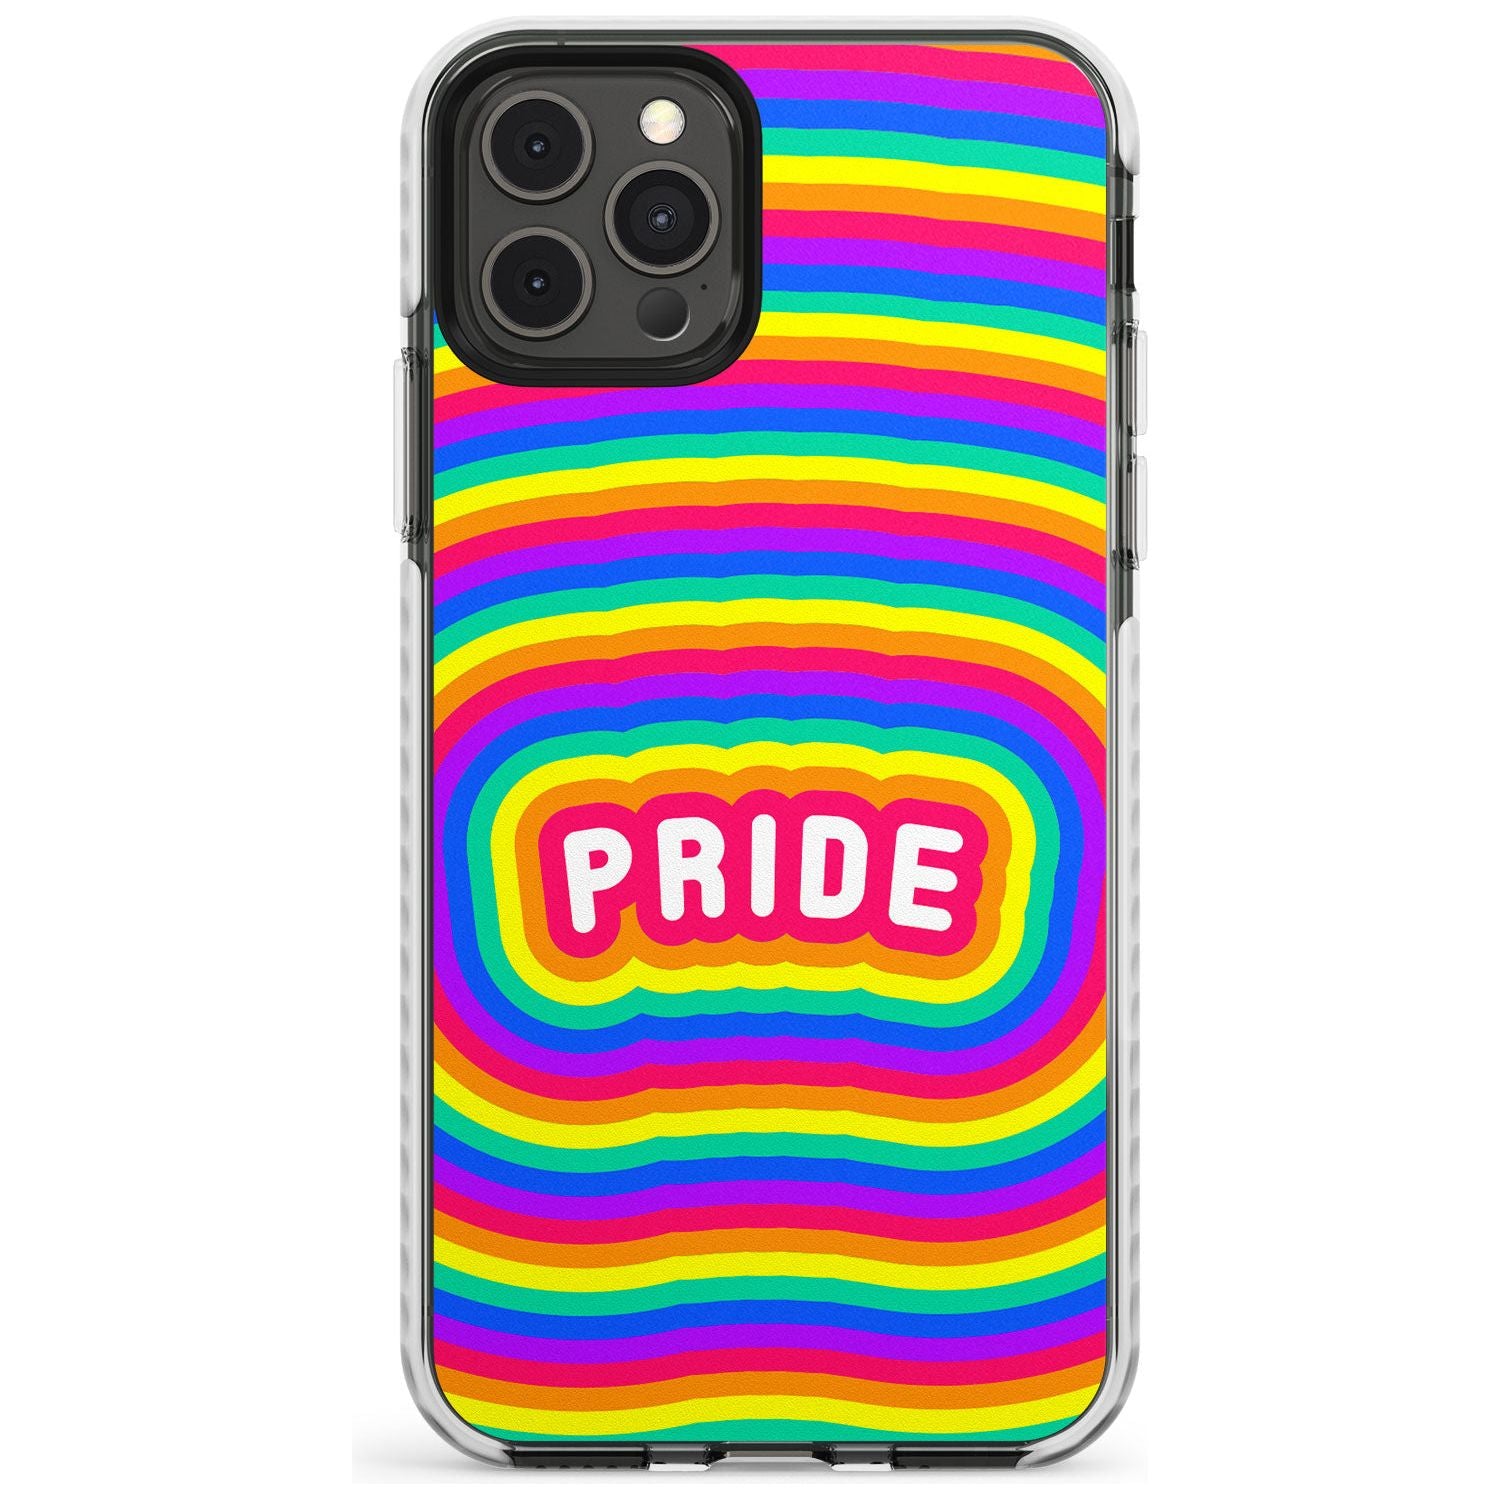 Pride Impact Phone Case for iPhone 11 Pro Max